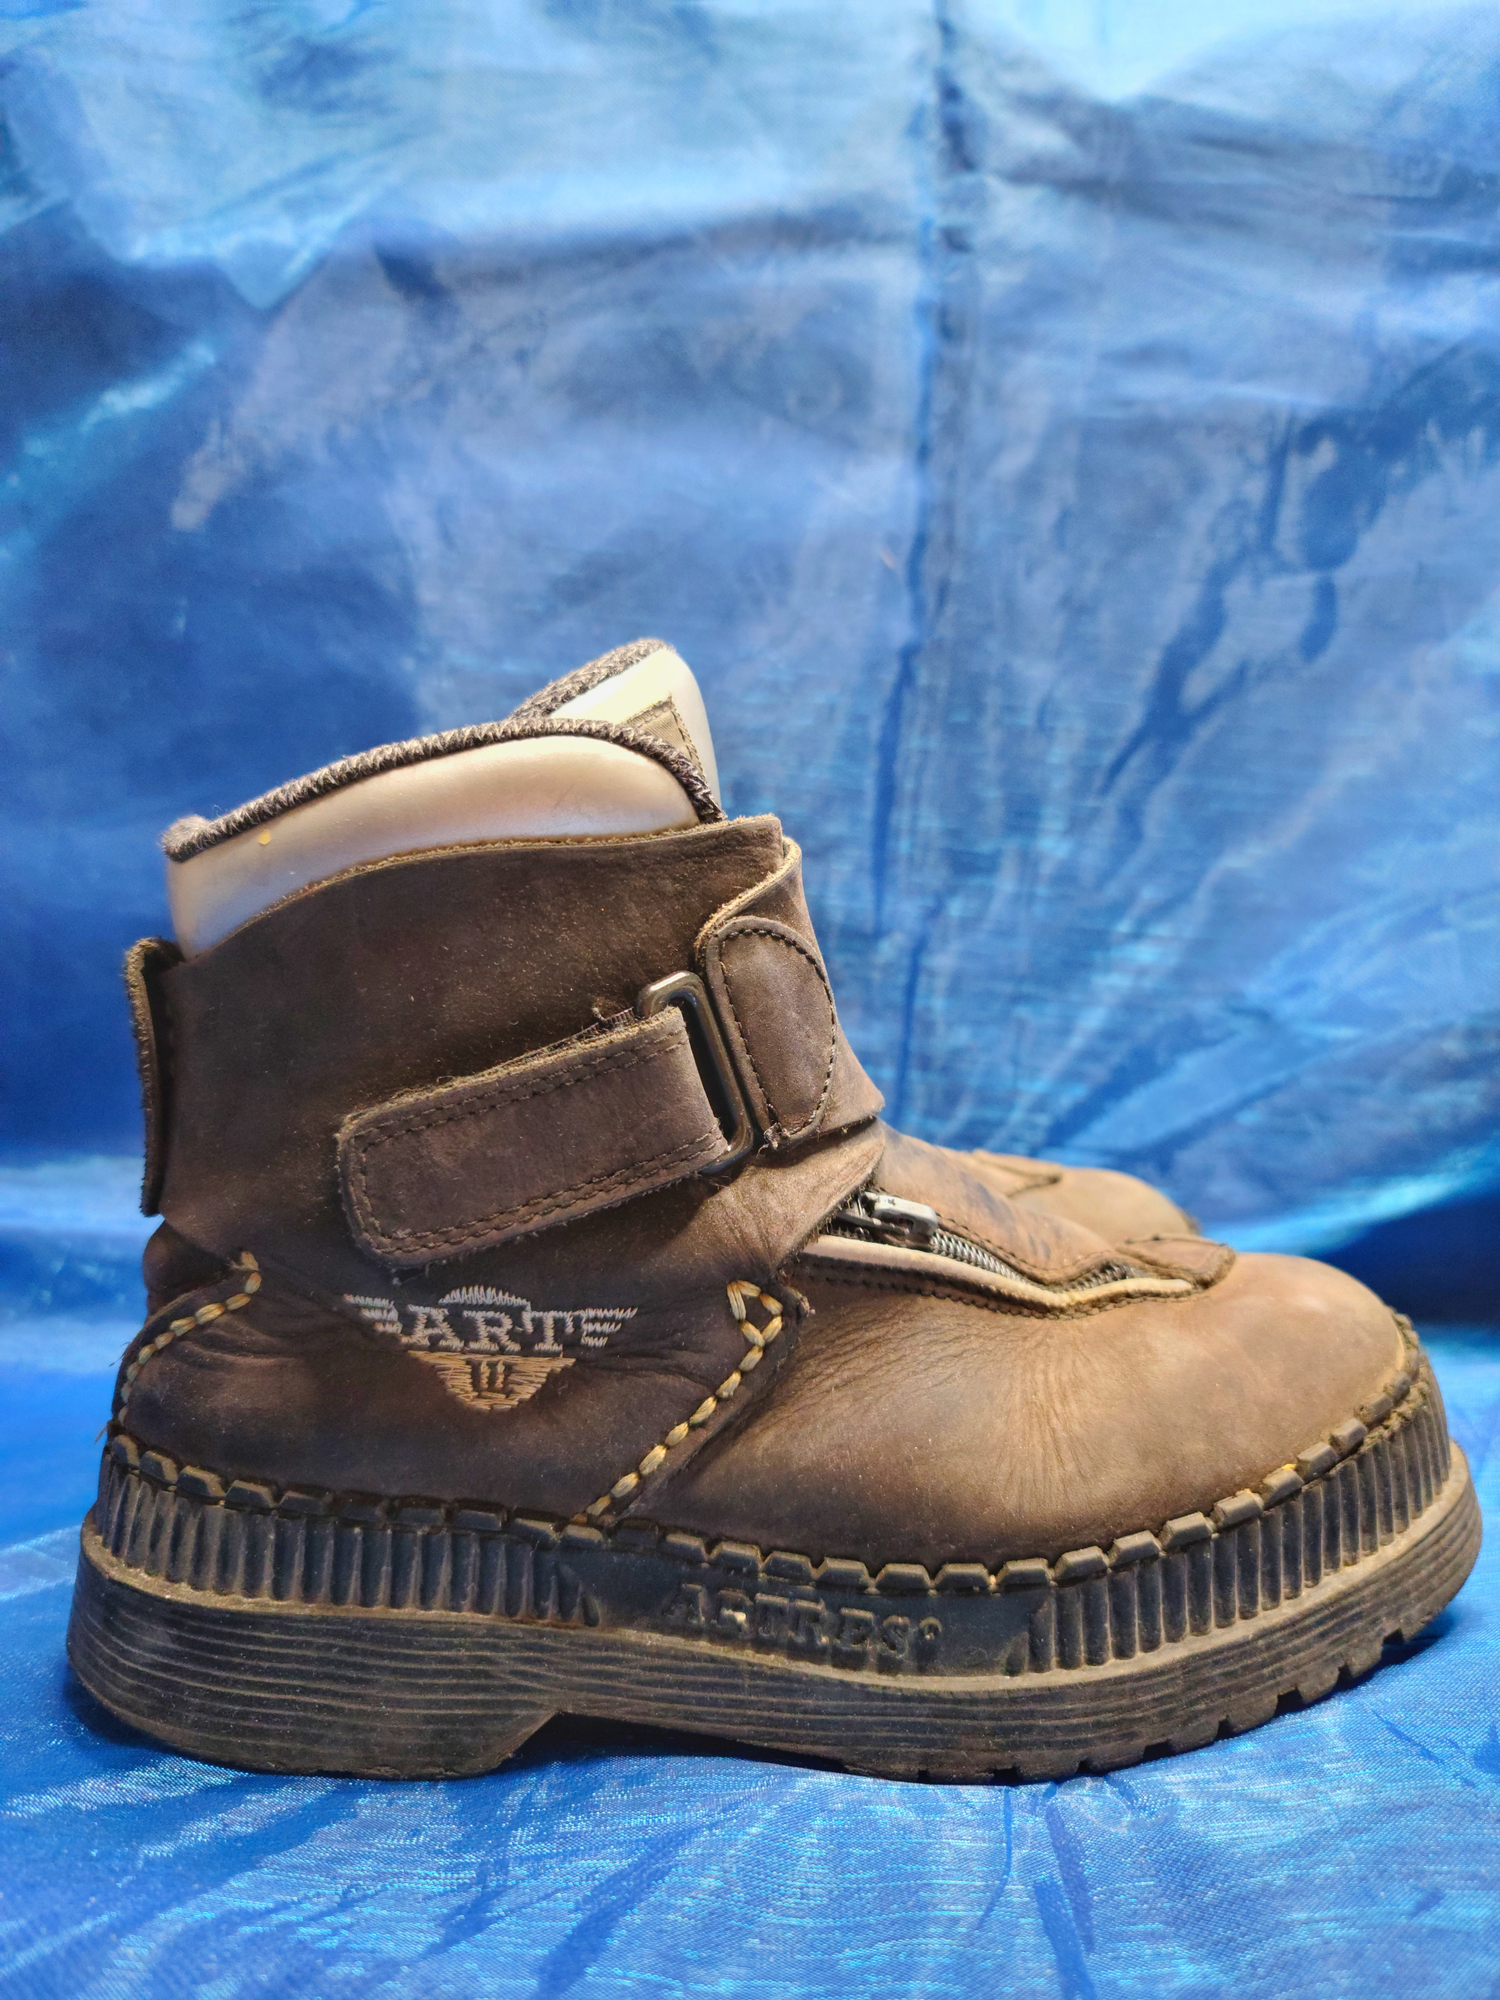 Art boots vintage bottes alternatif shoes  chaussures plateformes chunky chelsea 90s archive sportwear